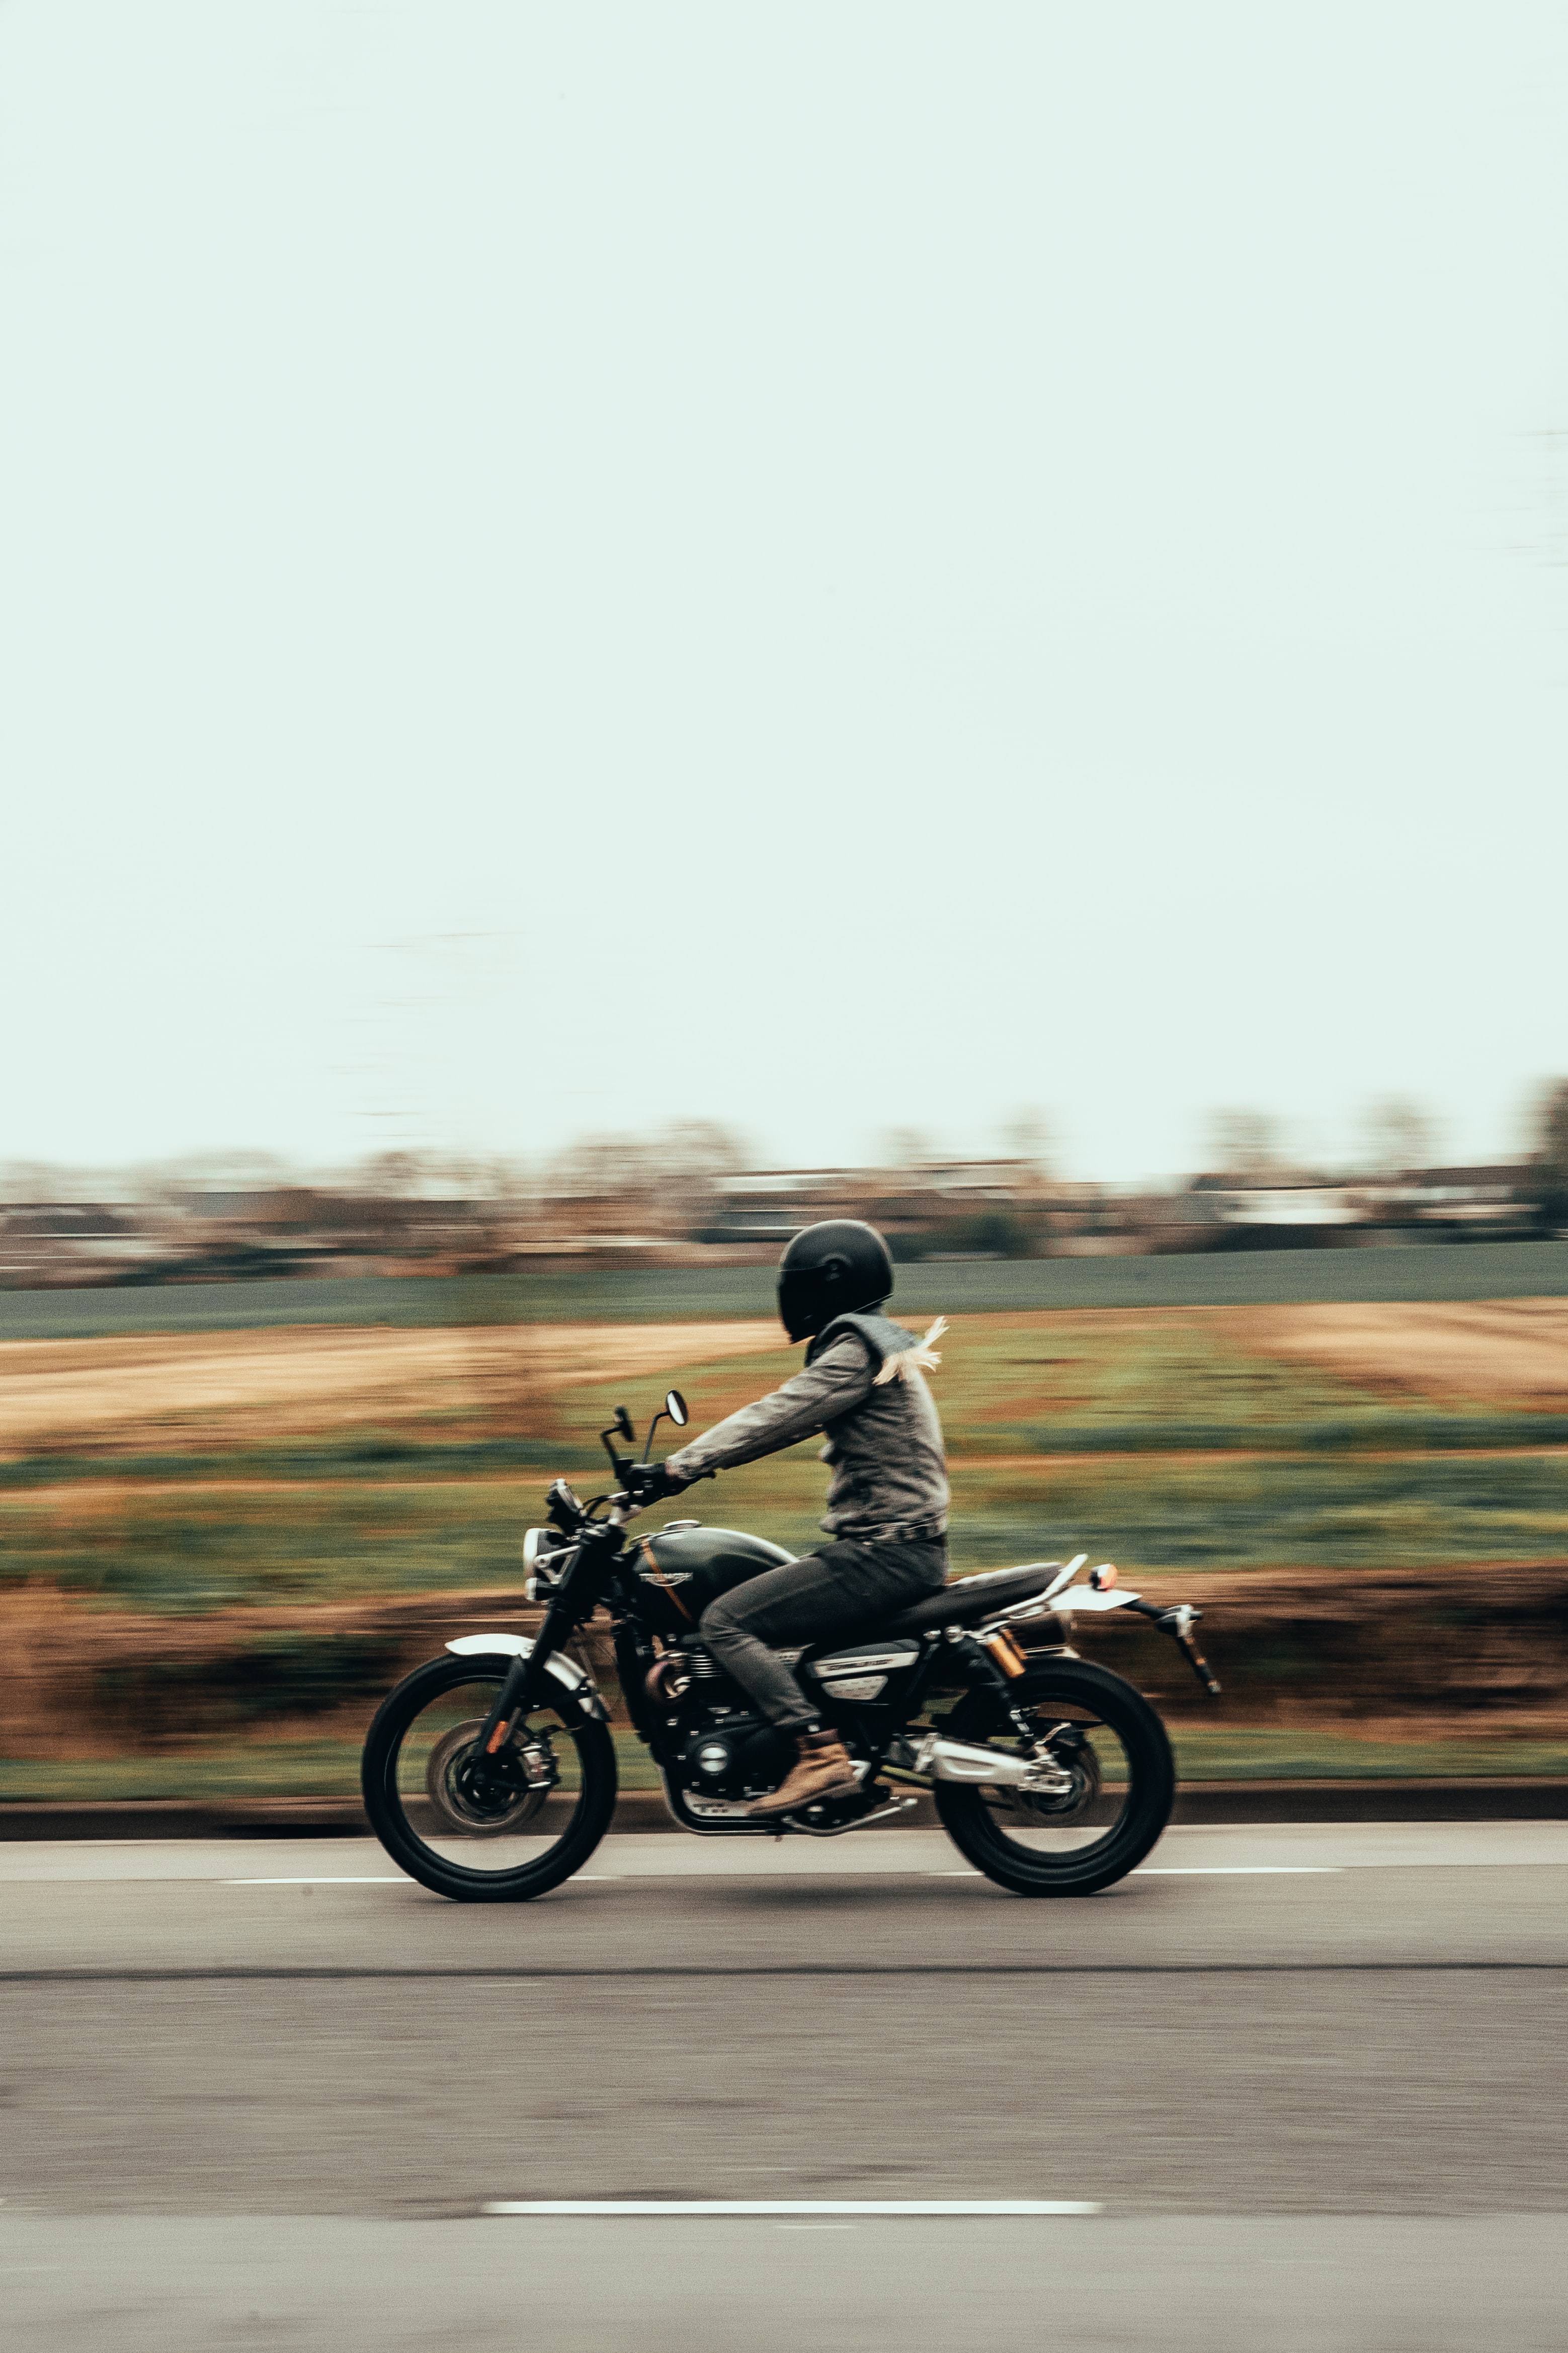 helmet, motorcycles, traffic, movement, motorcycle iphone wallpaper